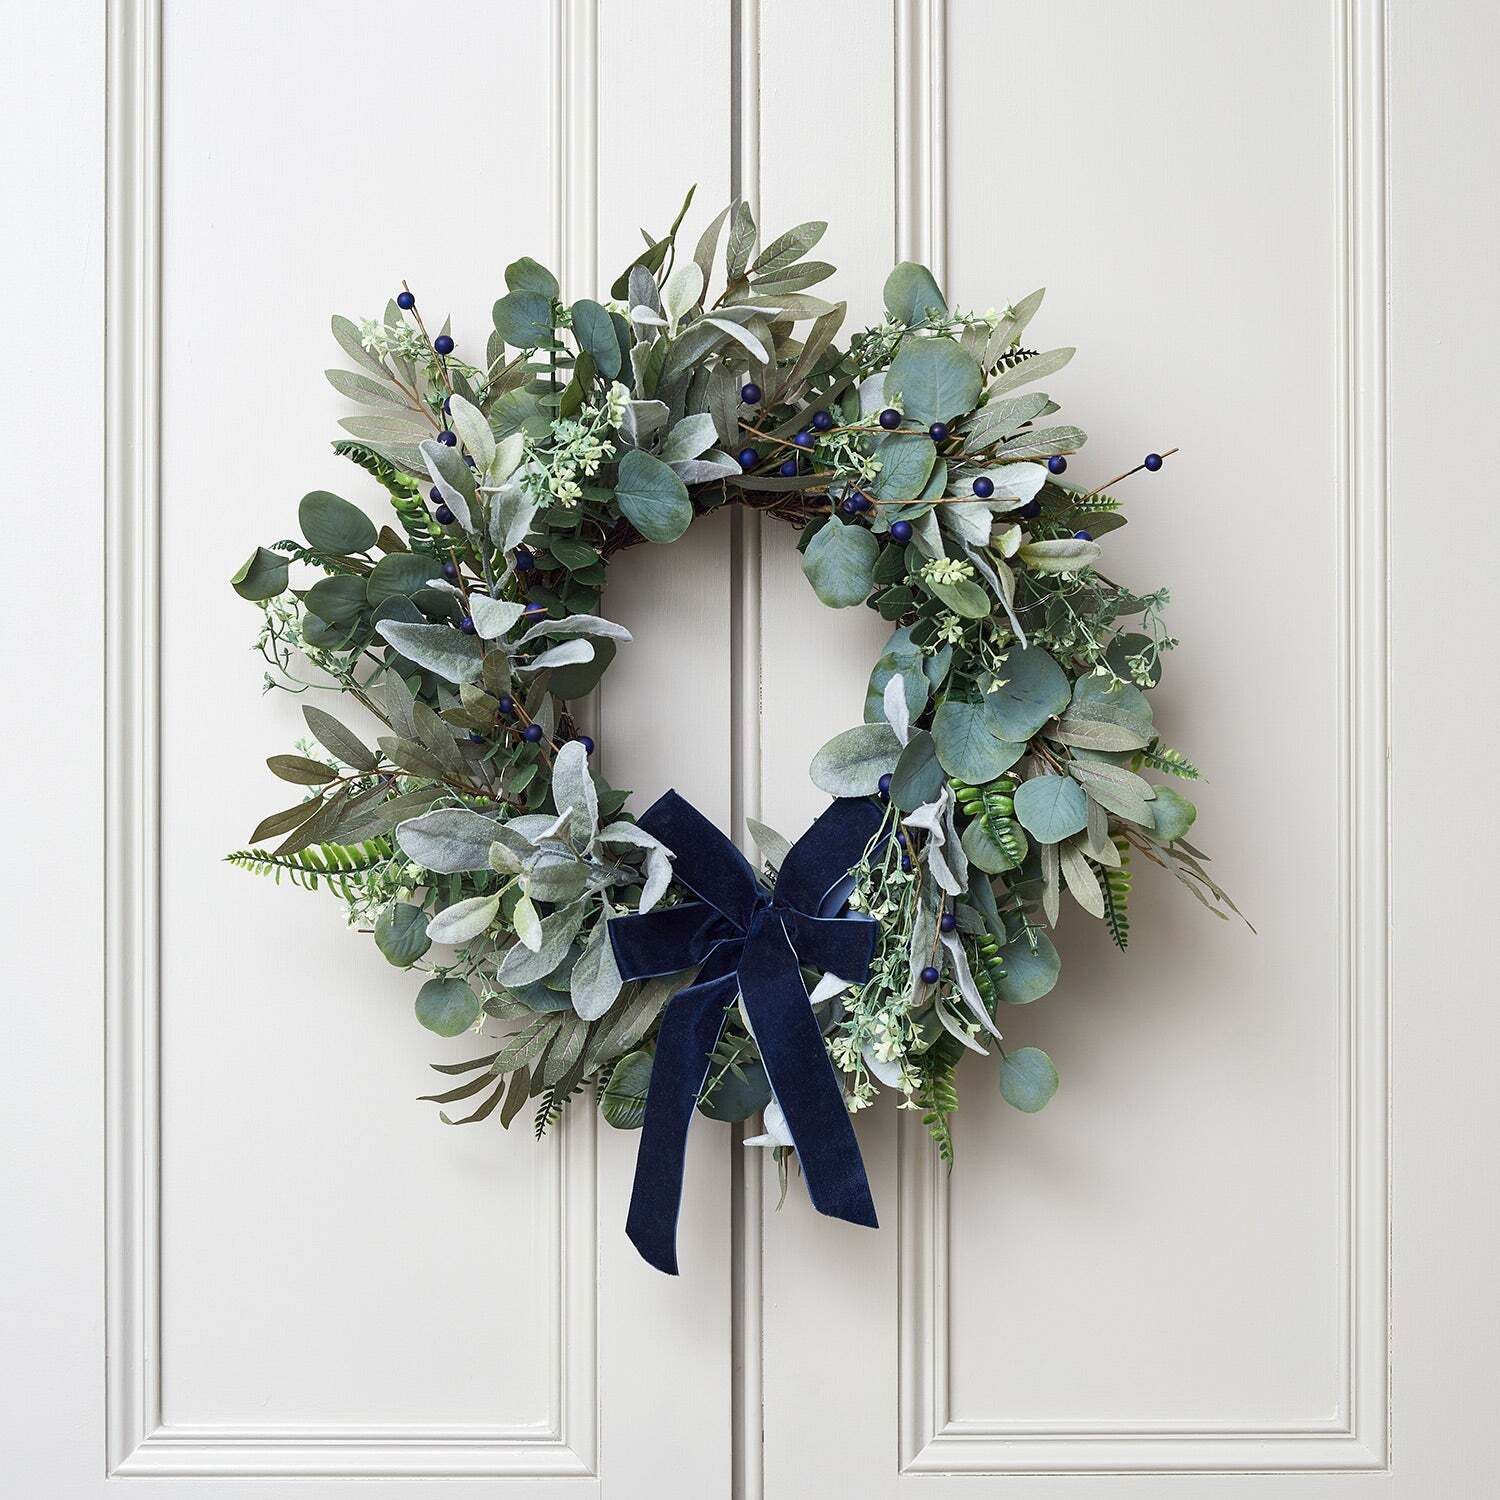 50cm Blue Berry Christmas Wreath - image 1